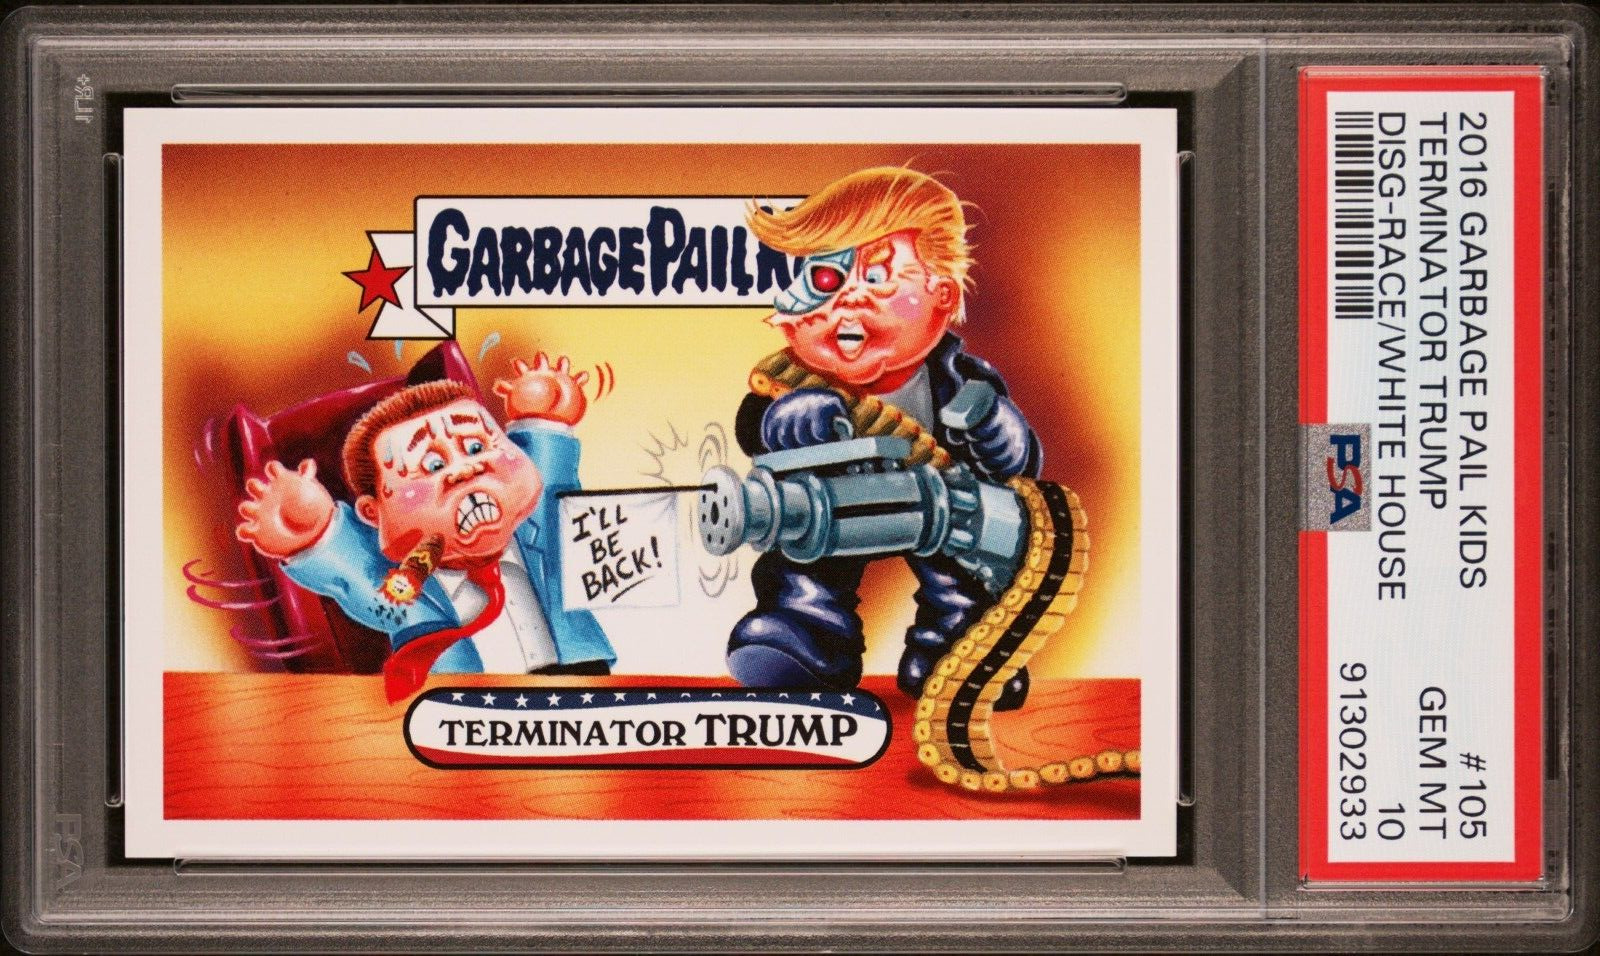 2016 Garbage Pail Kids DisgRace White House TERMINATOR TRUMP Donald #105 PSA 10